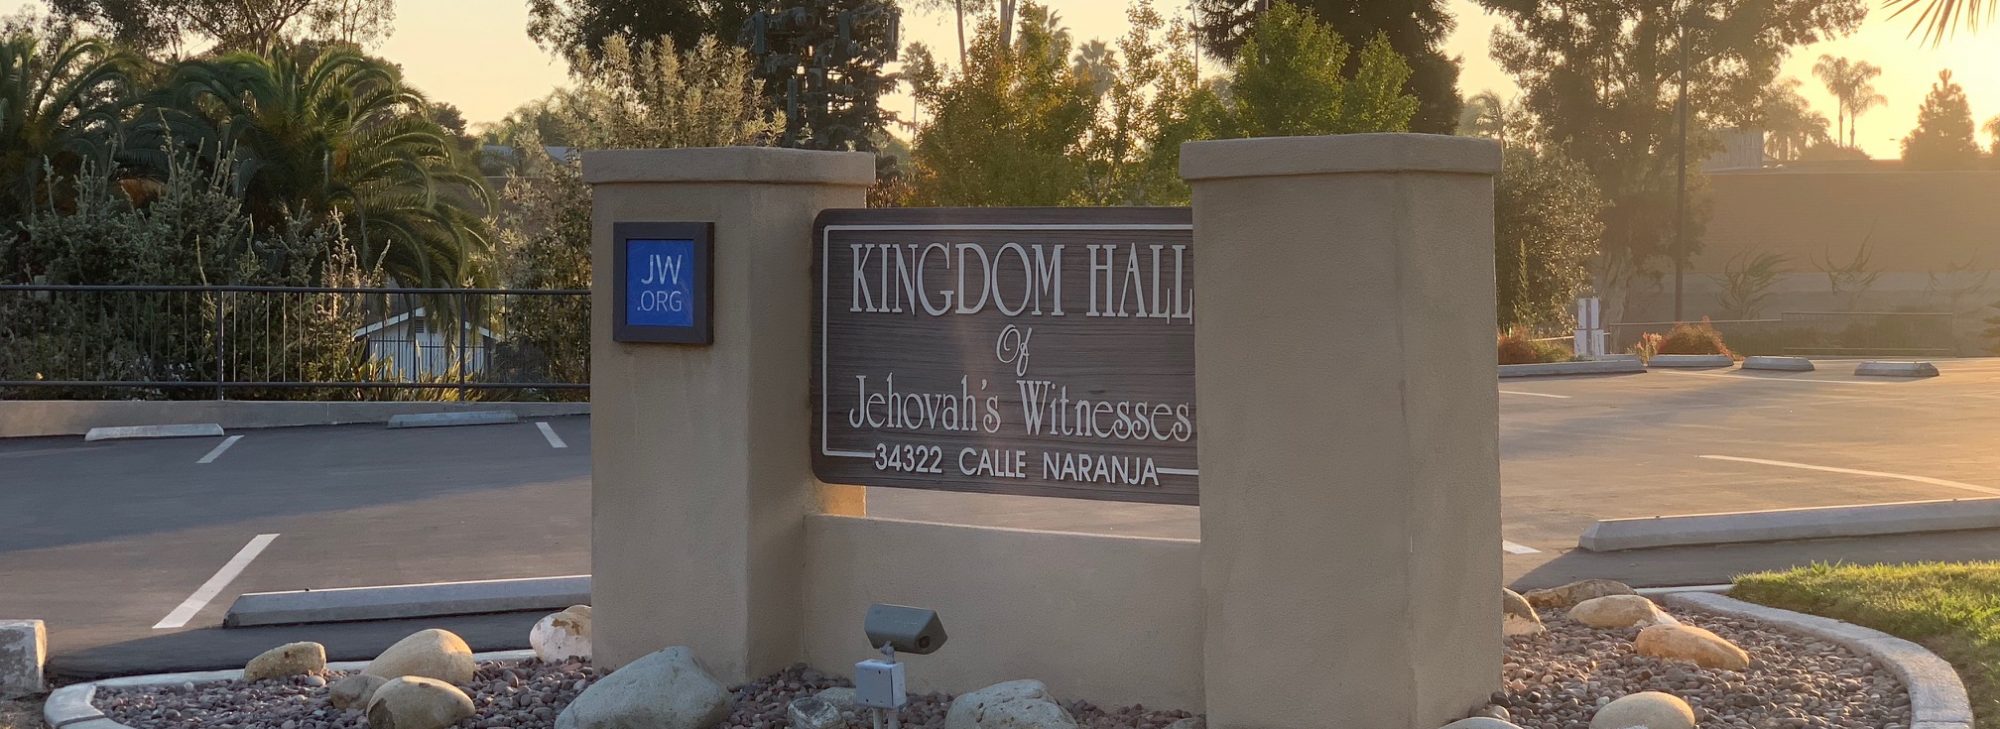 Capistrano Beach Kingdom Hall of Jehovah's Witnesses